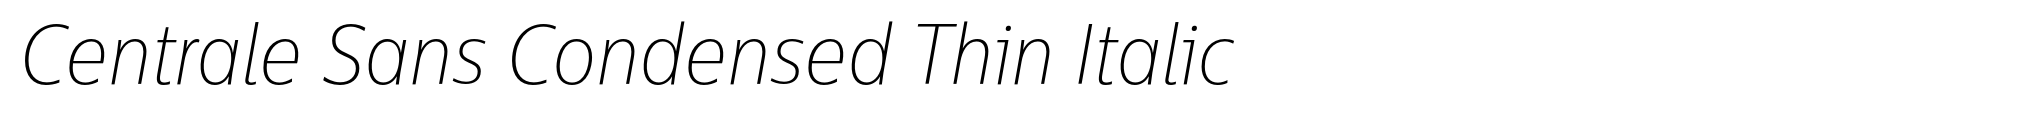 Centrale Sans Condensed Thin Italic image